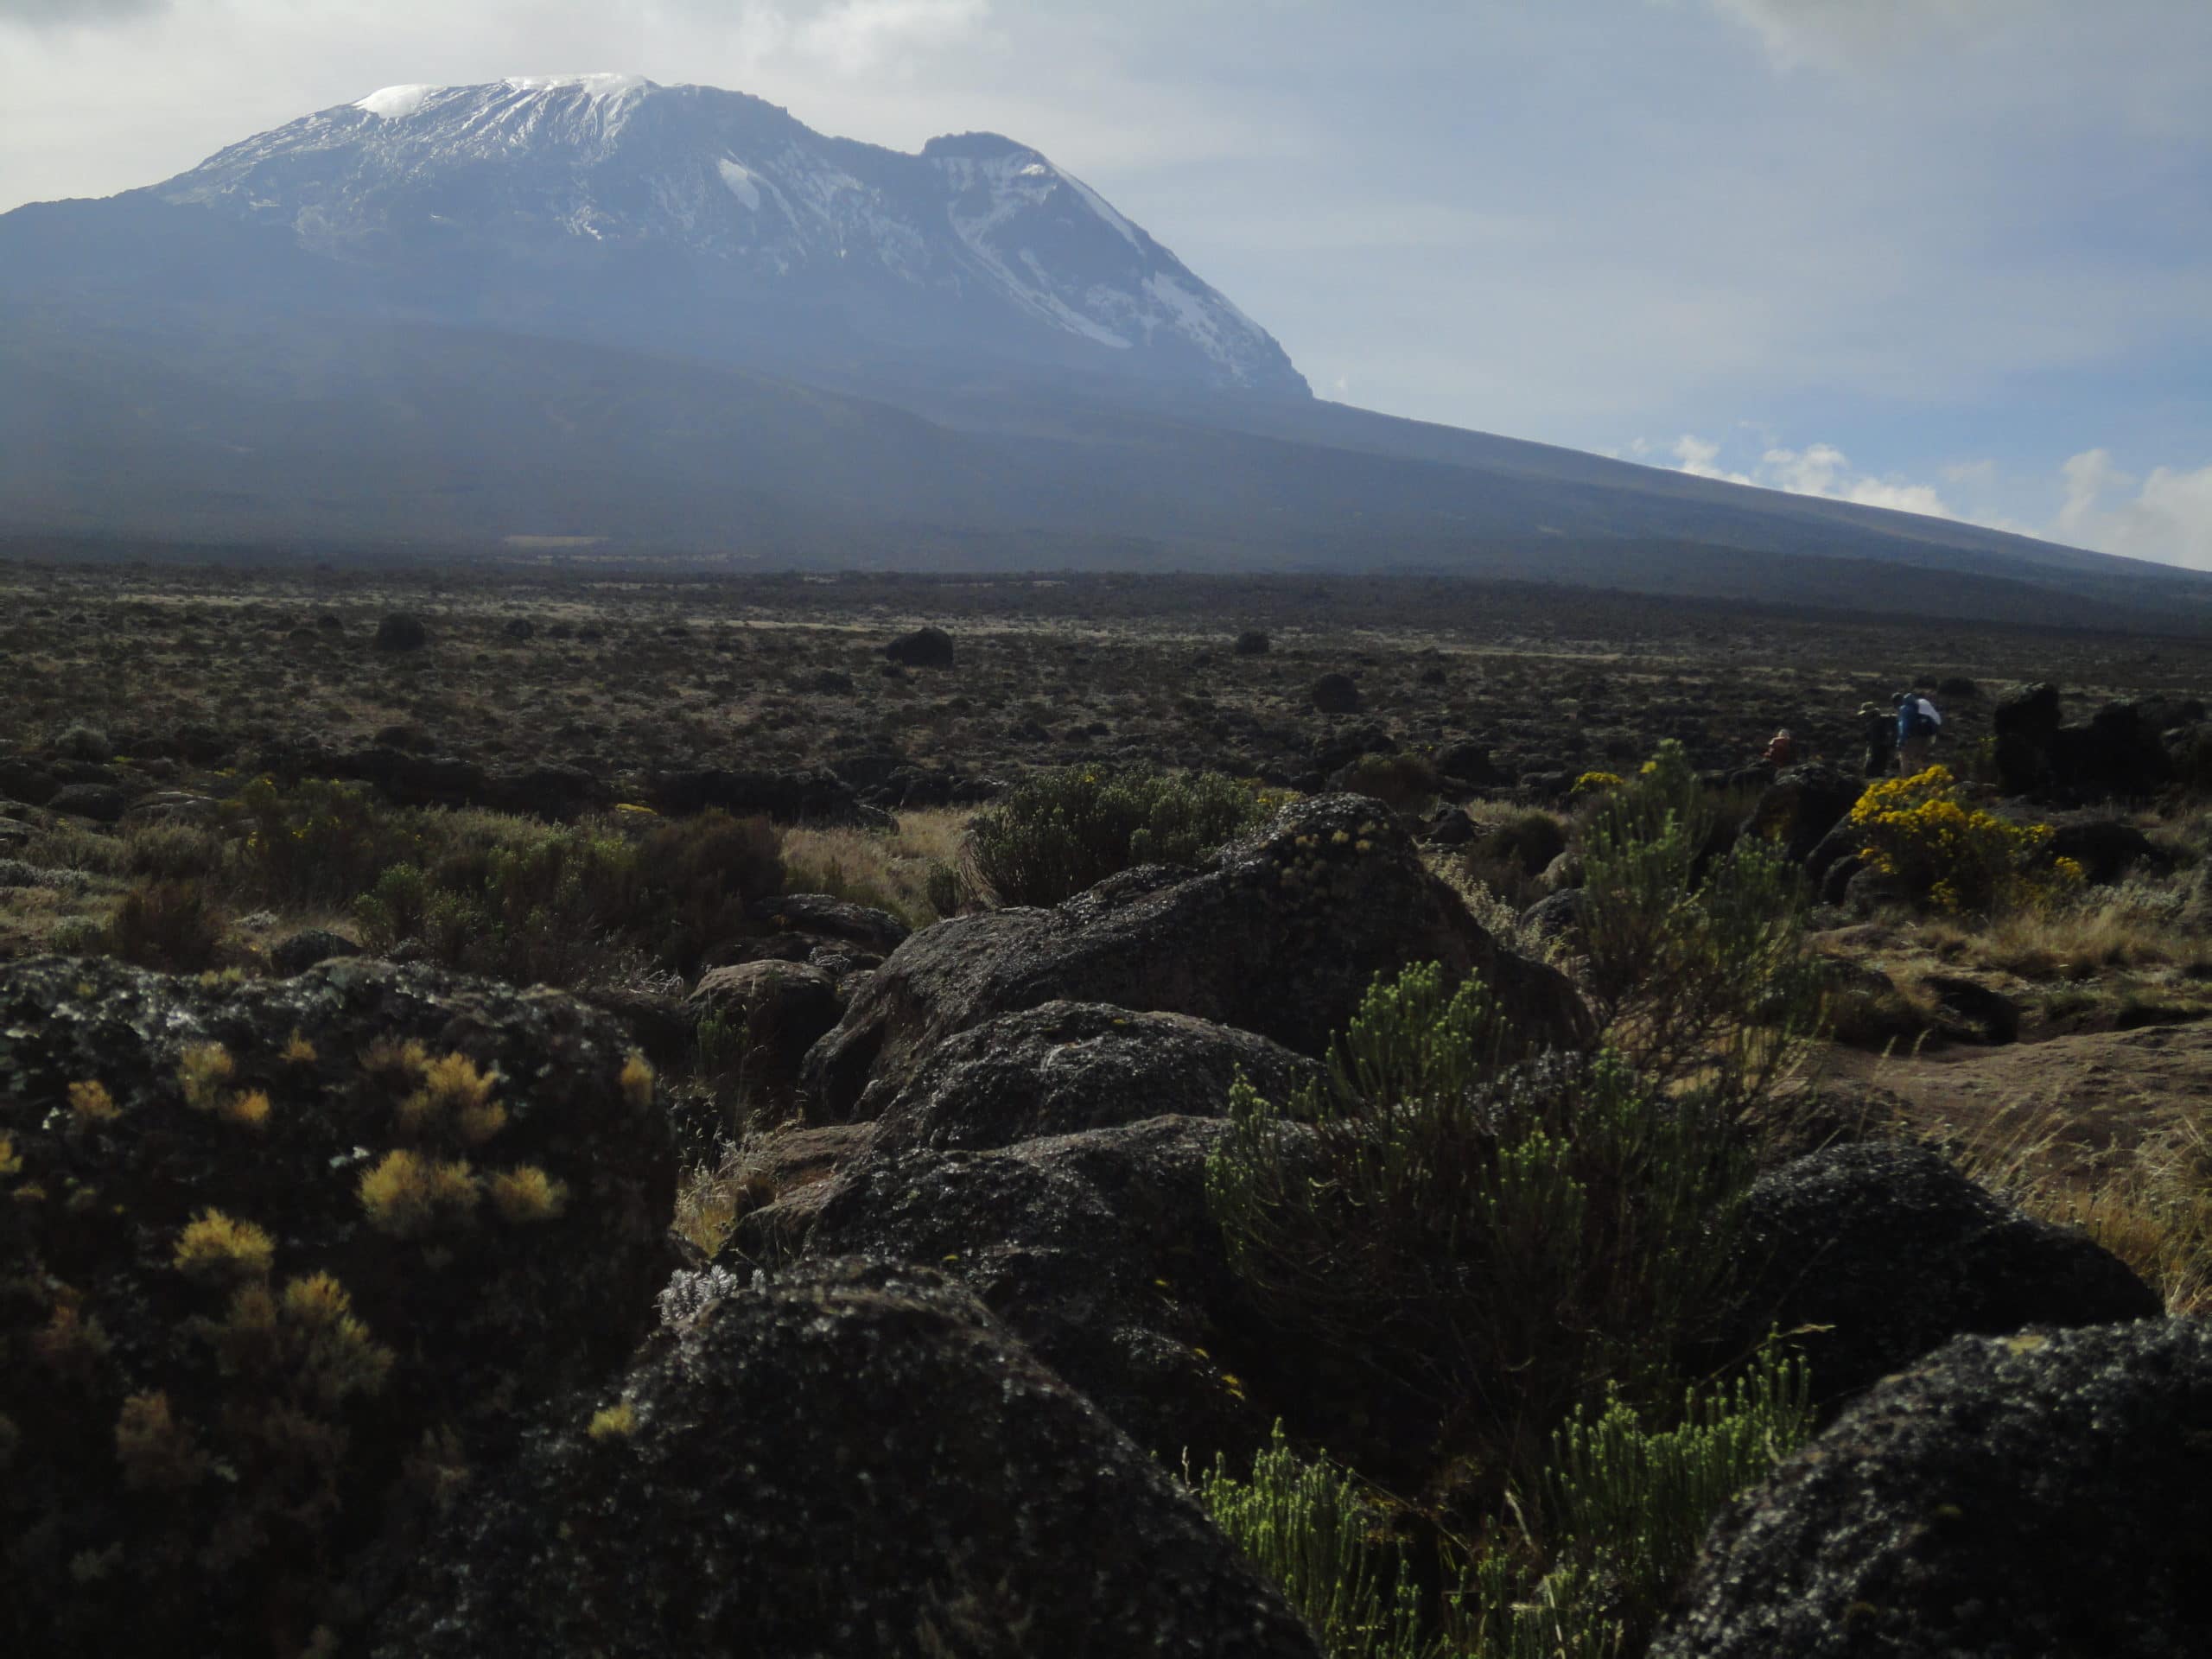 The summit of Kilimanjaro from the Shira Plateau